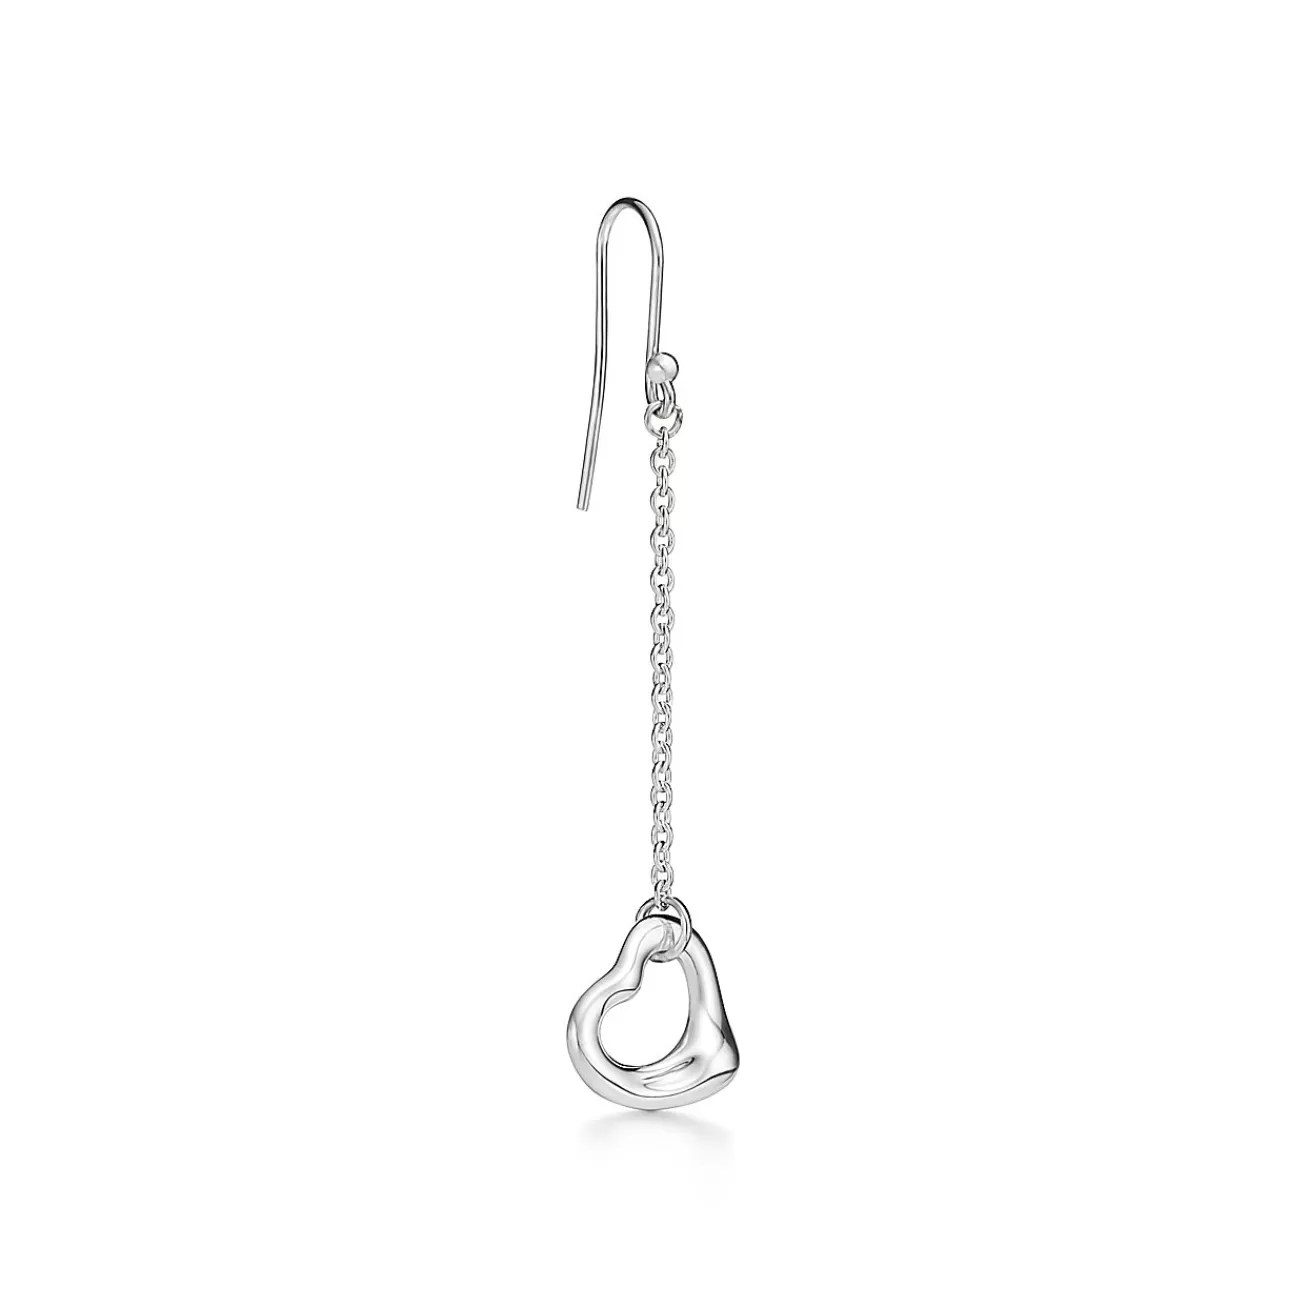 Tiffany & Co. Elsa Peretti® Open Heart drop earrings in sterling silver. | ^ Earrings | Sterling Silver Jewelry